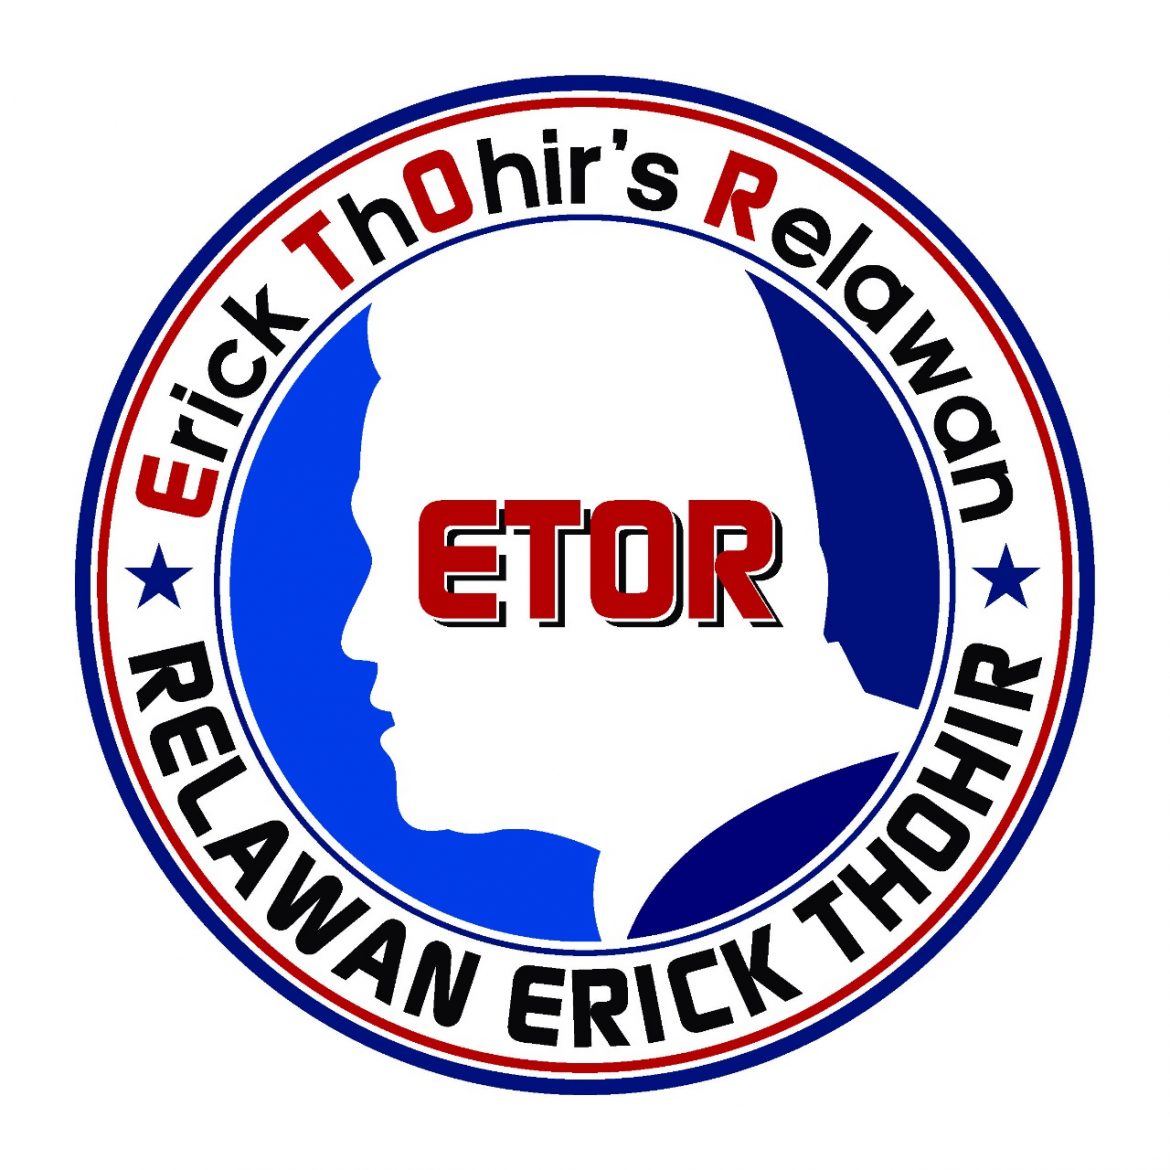 DPP Relawan ETOR Apresiasi Positif Hasil Survei Erick Thohir sebagai Capres di Jawa Timur